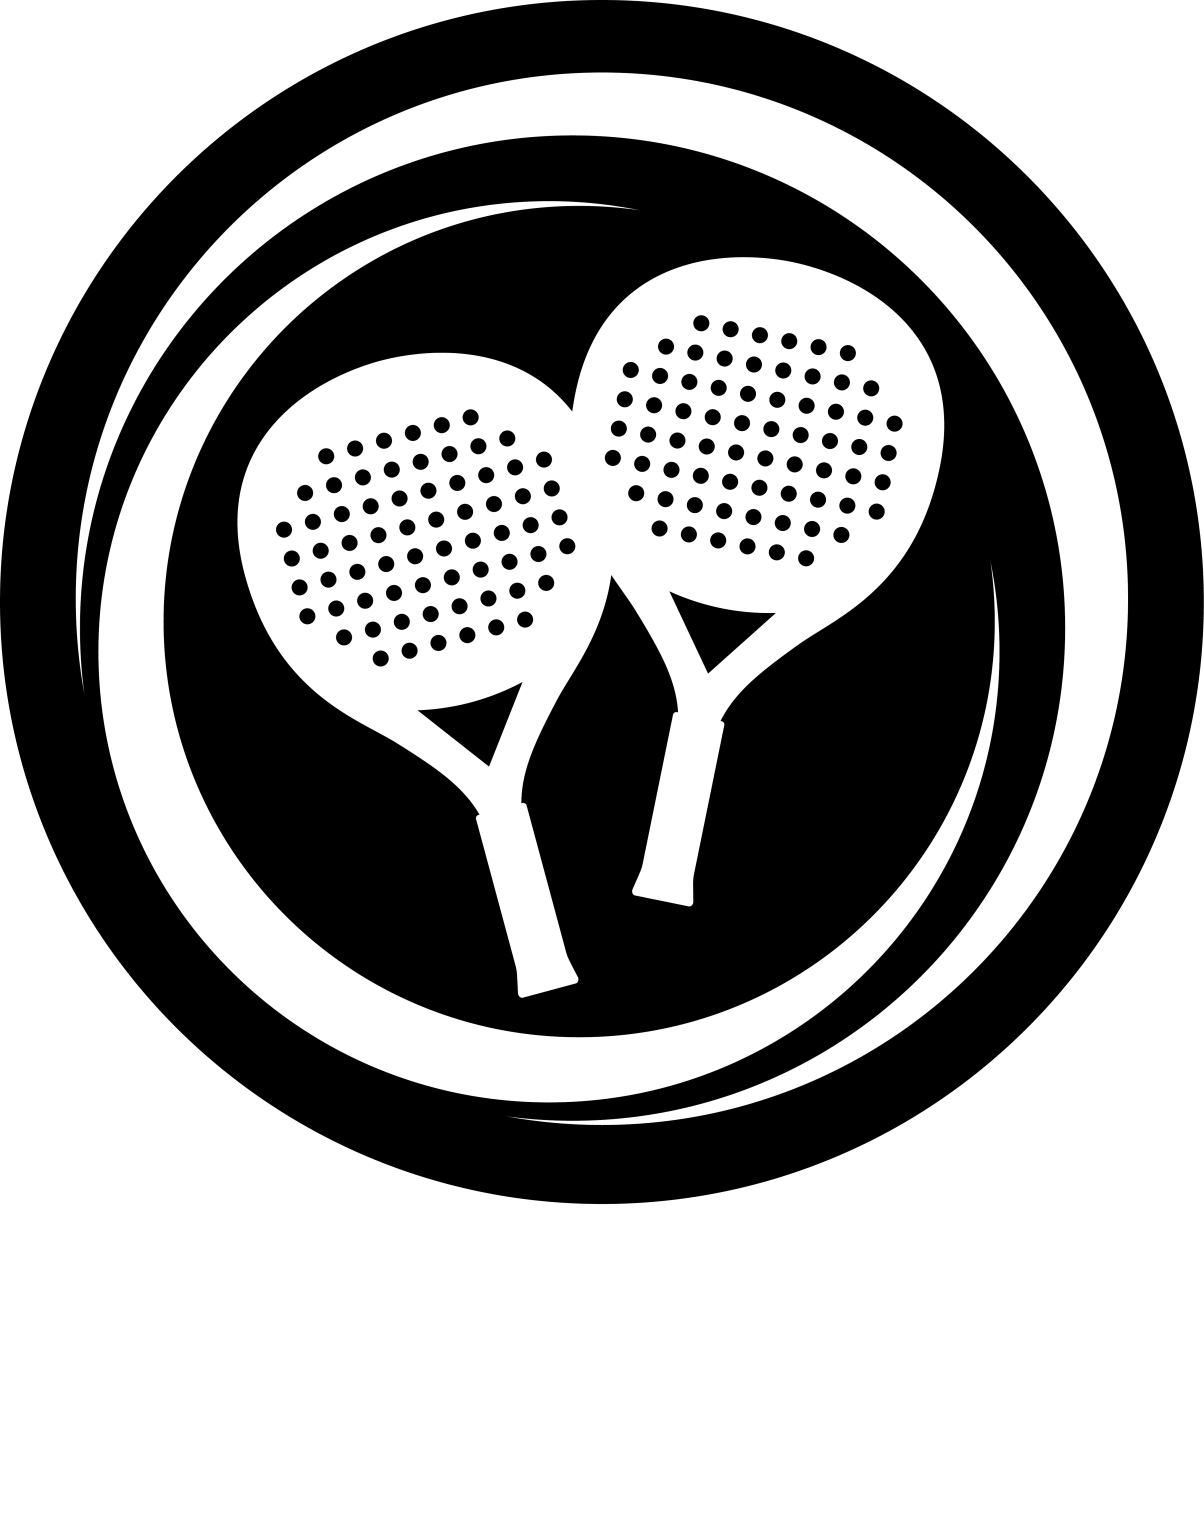 Profile image of venue Padelclub Hoofddorp